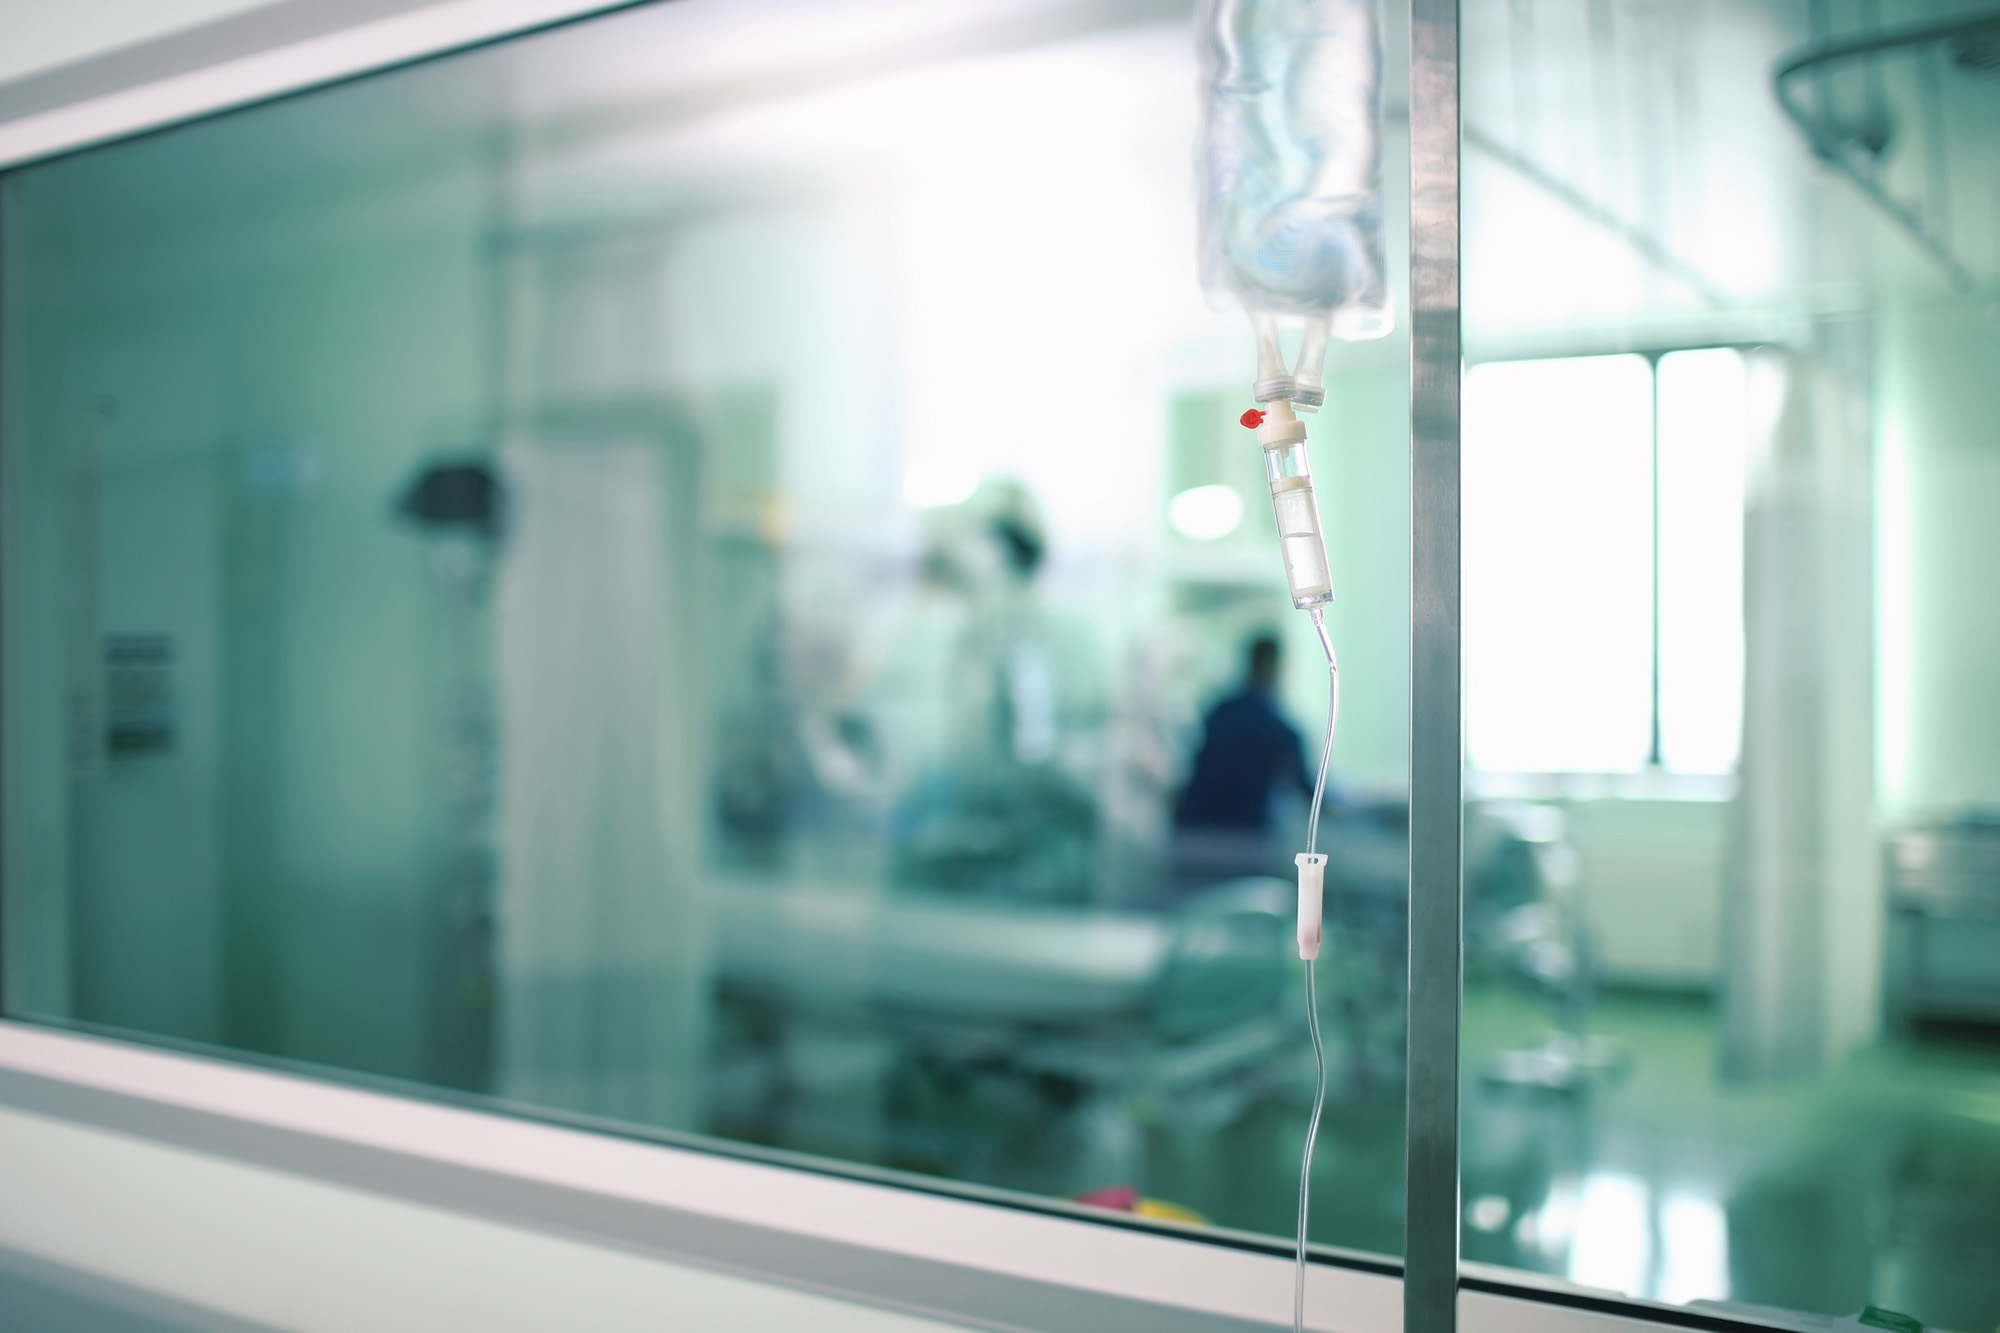 Blurred photo of a hospital room through a corridor window